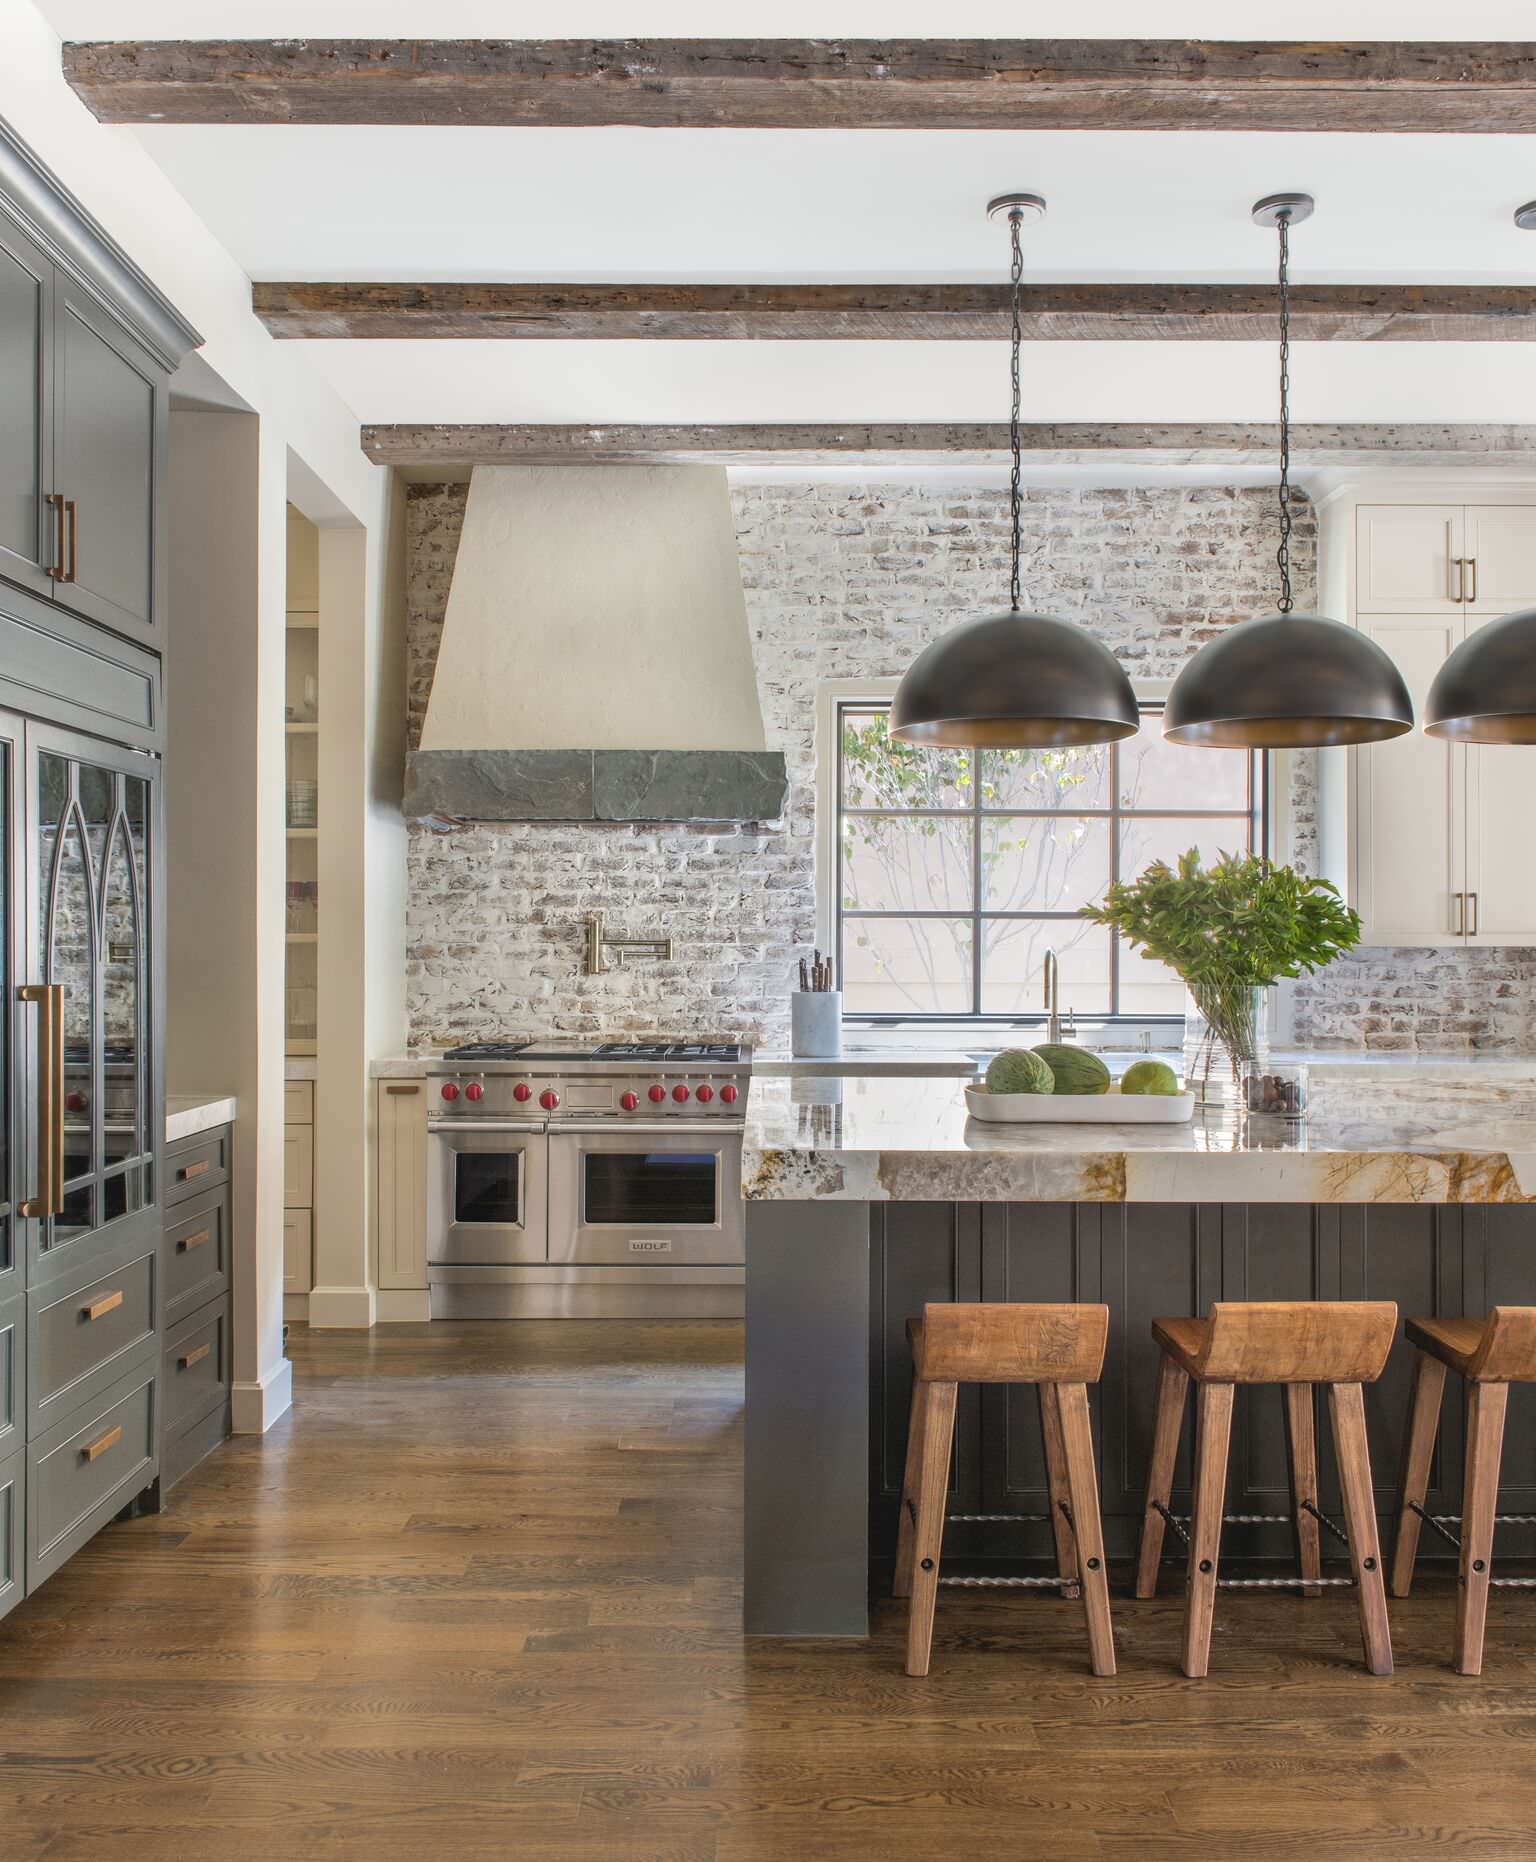 75 Beautiful Farmhouse Kitchen With Brick Backsplash Pictures Ideas December